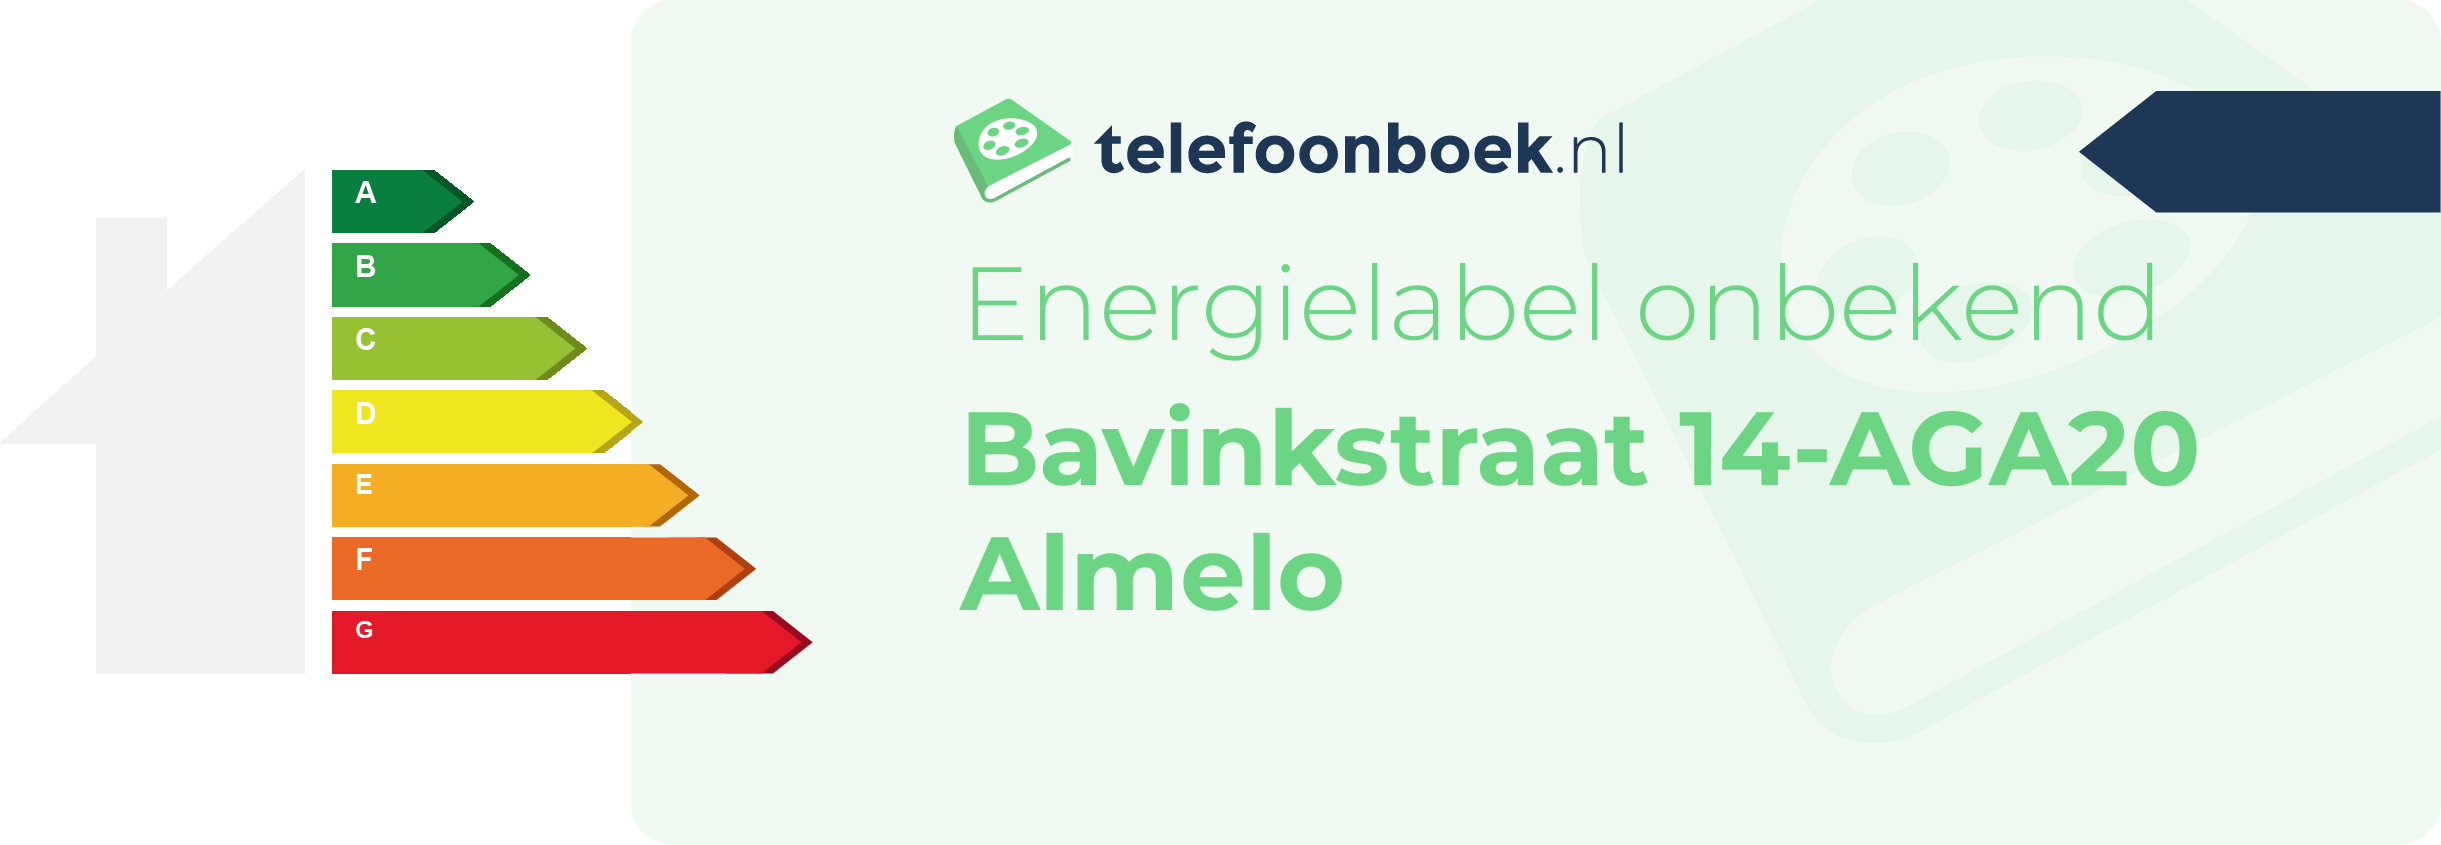 Energielabel Bavinkstraat 14-AGA20 Almelo